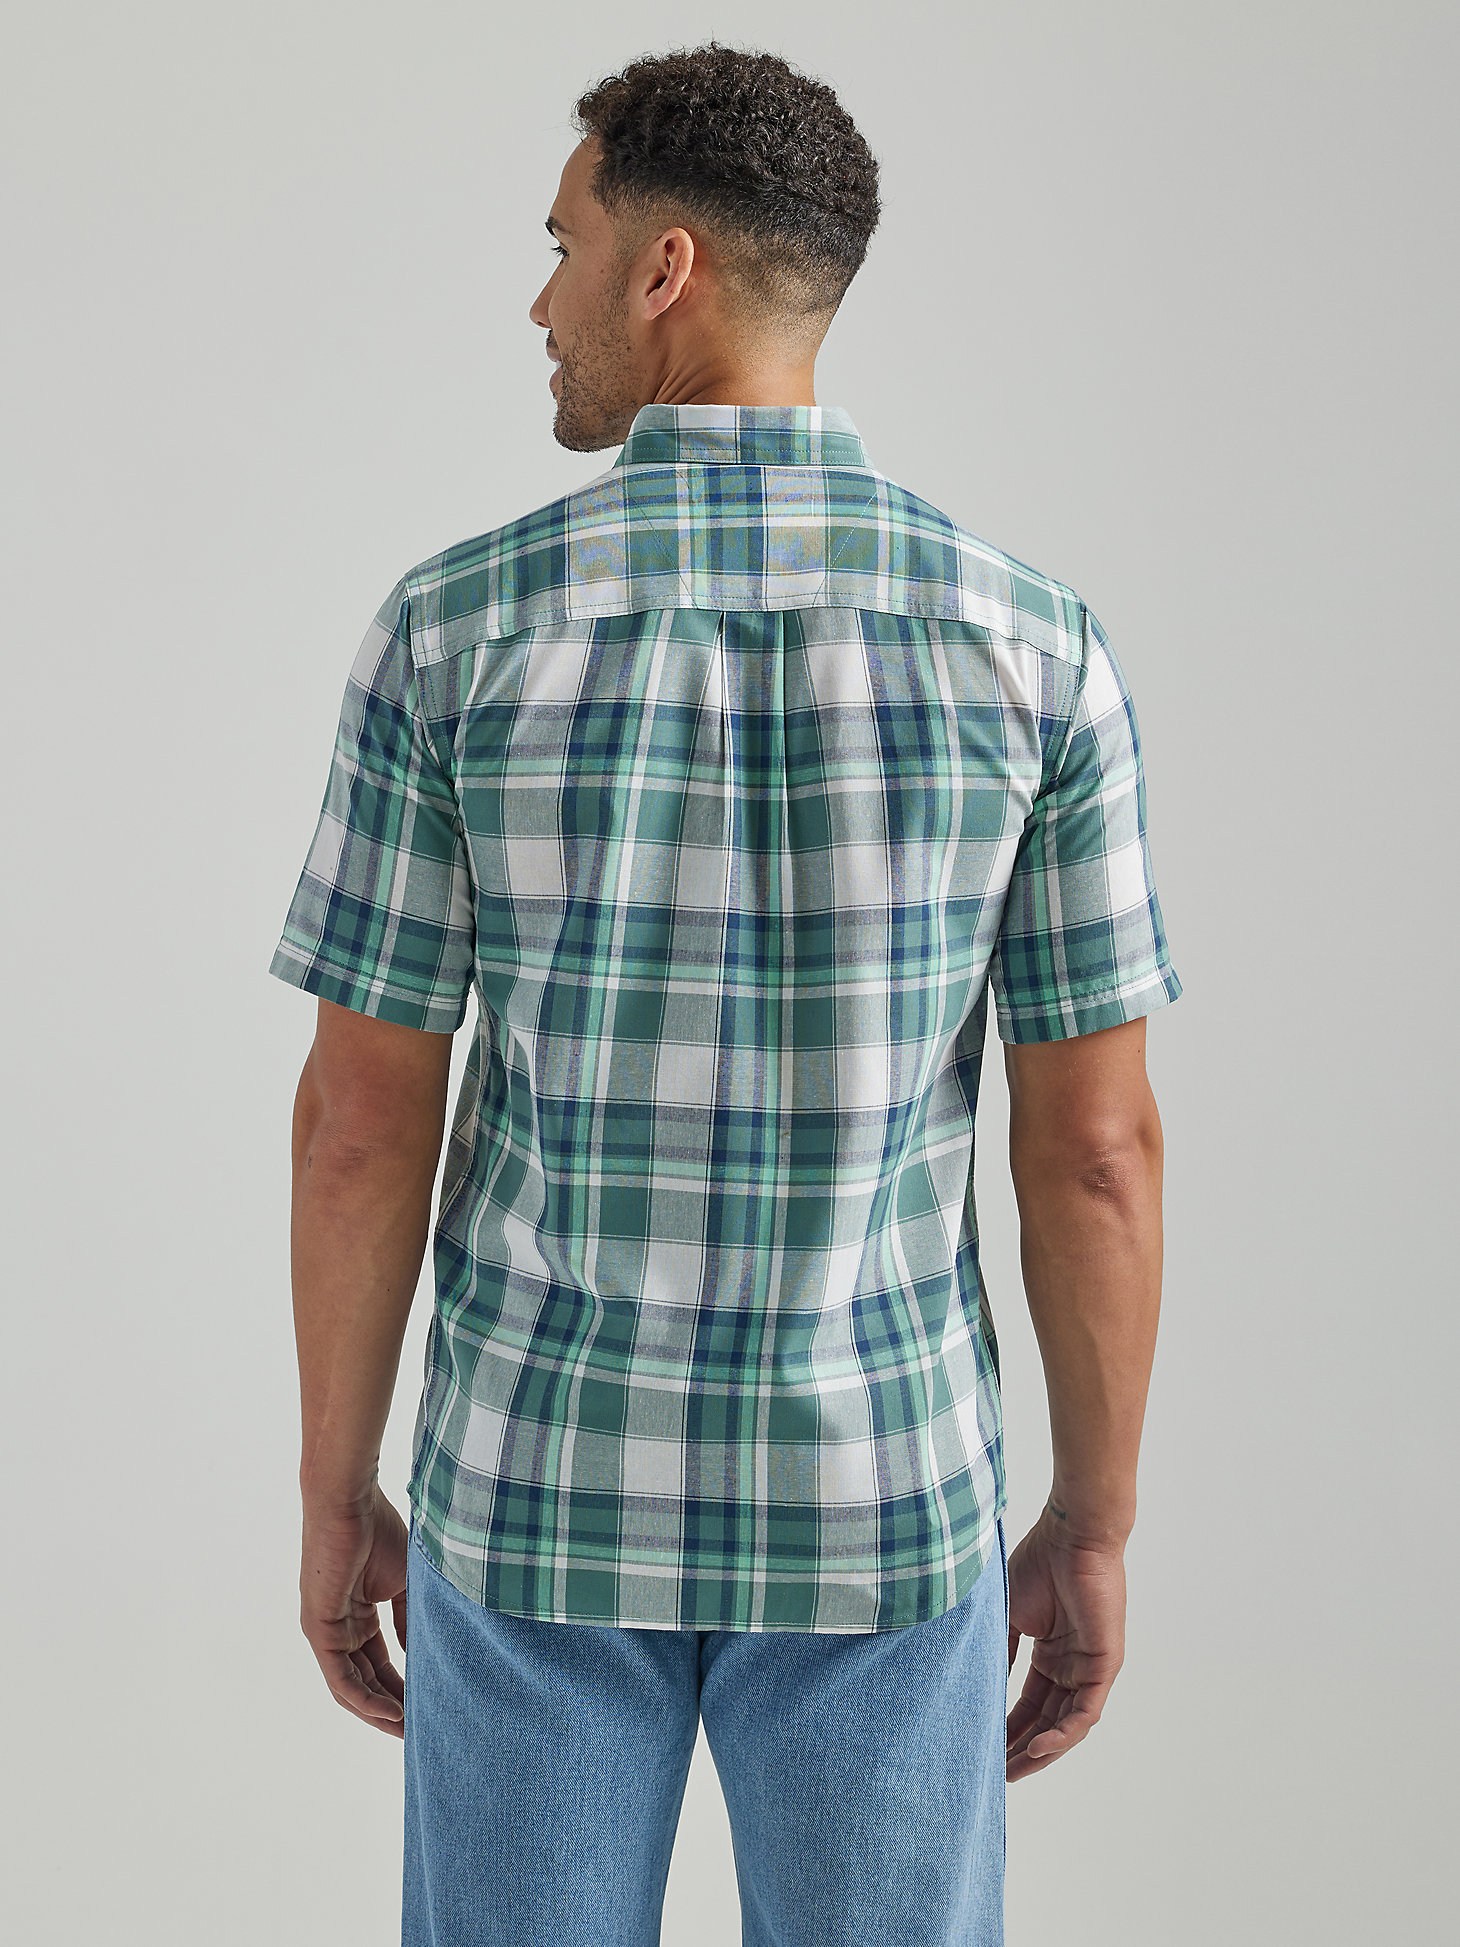 Wrangler Rugged Wear® Short Sleeve Easy Care Plaid Button-Down Shirt in Fir Green alternative view 1